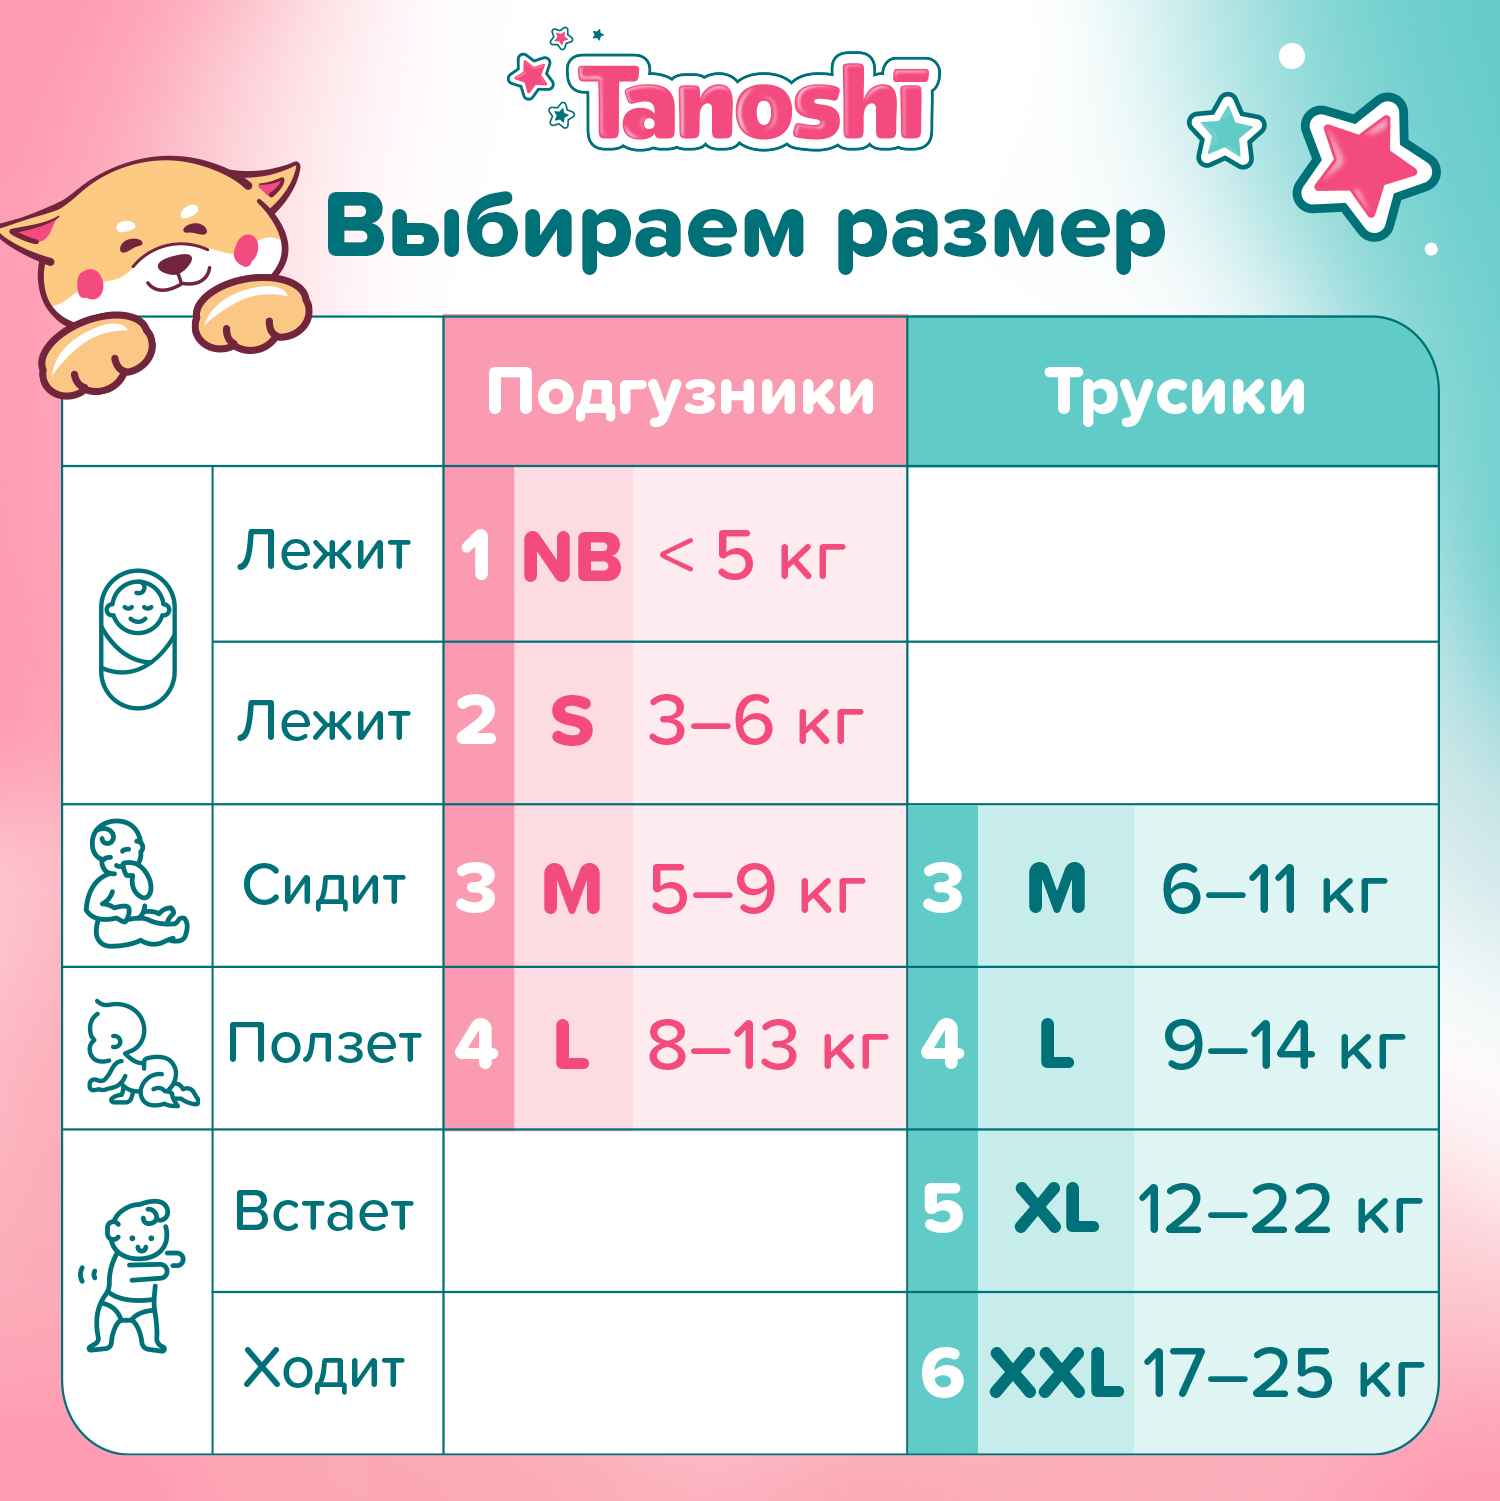 Подгузники 1 (NB) Tanoshi, 34 шт, вес до 5 кг